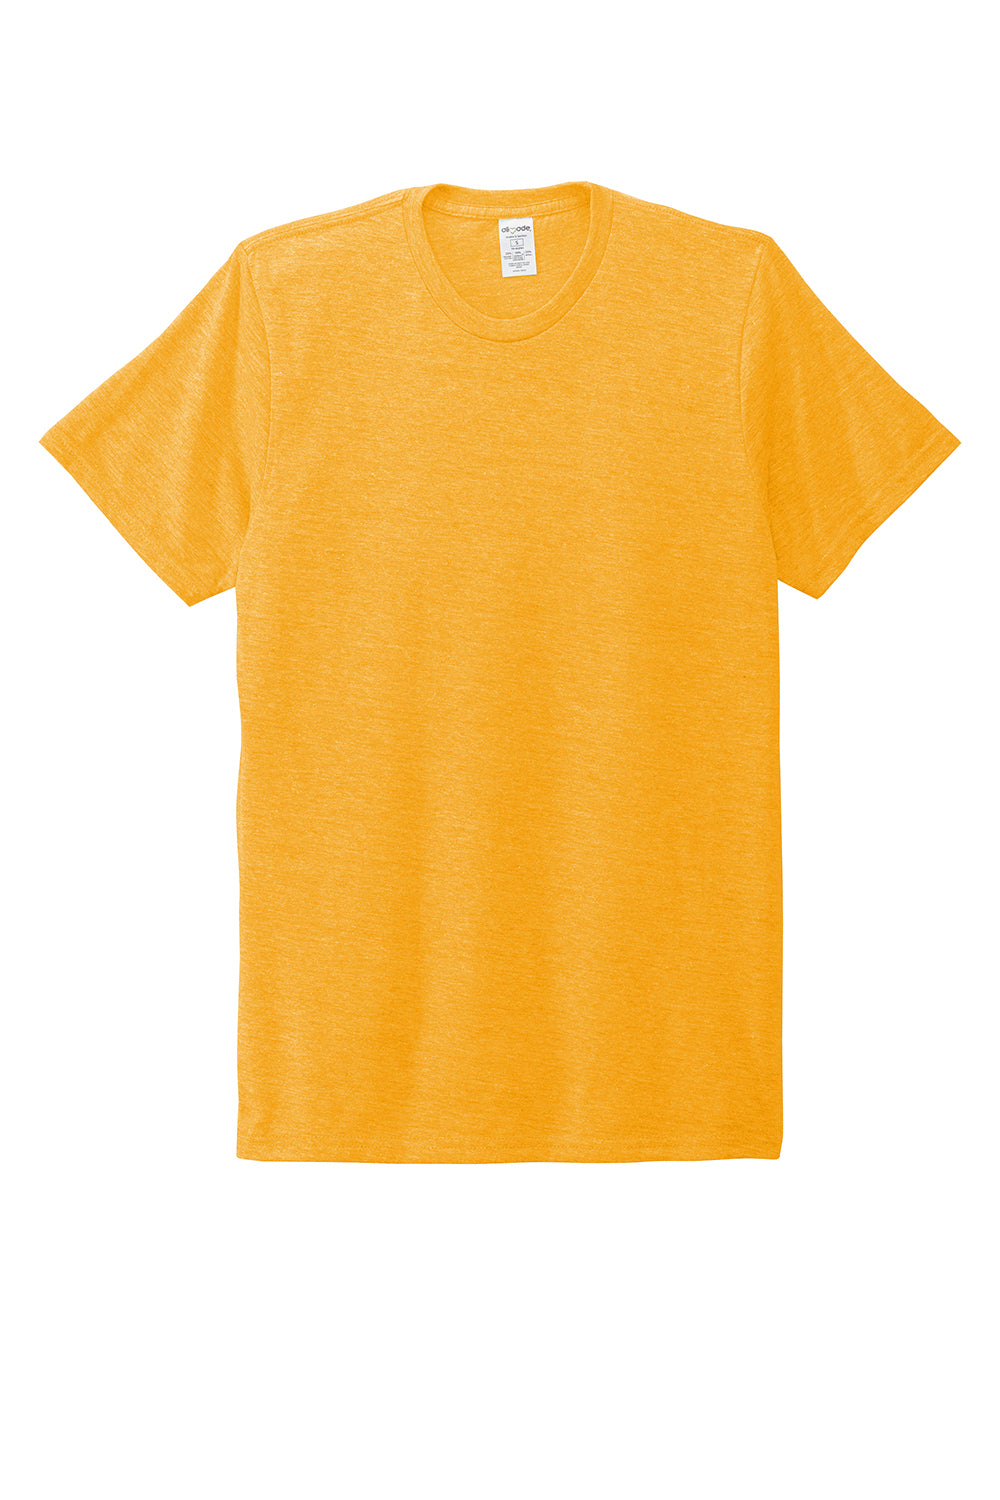 Allmade AL2004 Mens Short Sleeve Crewneck T-Shirt Orange You Fancy Flat Front